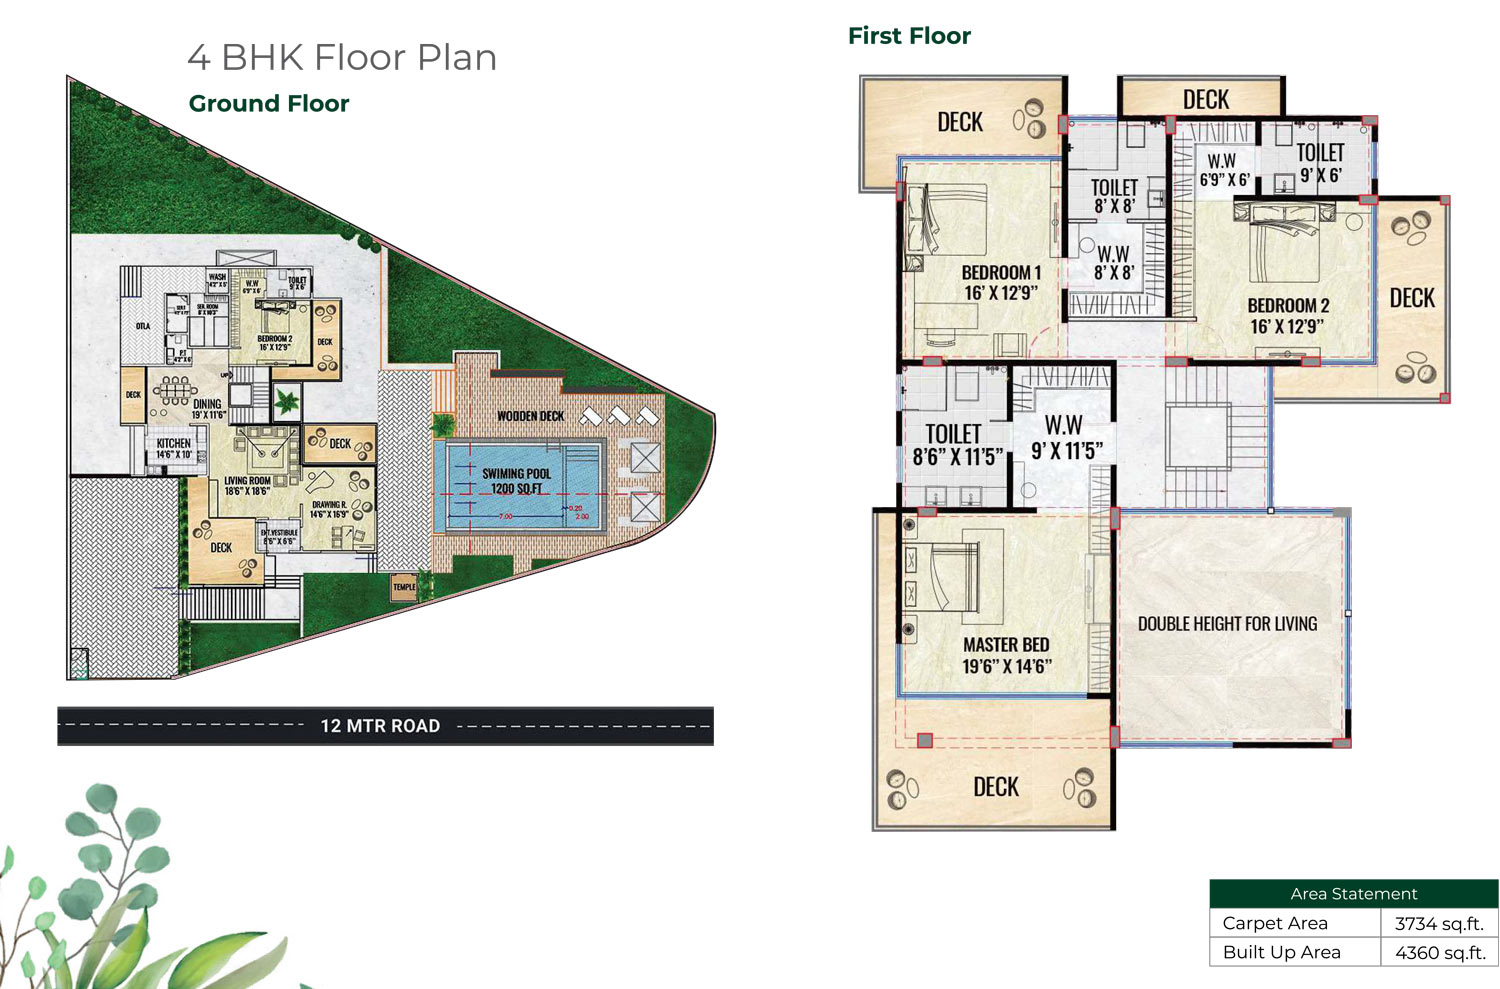 4bhk Floor Plans